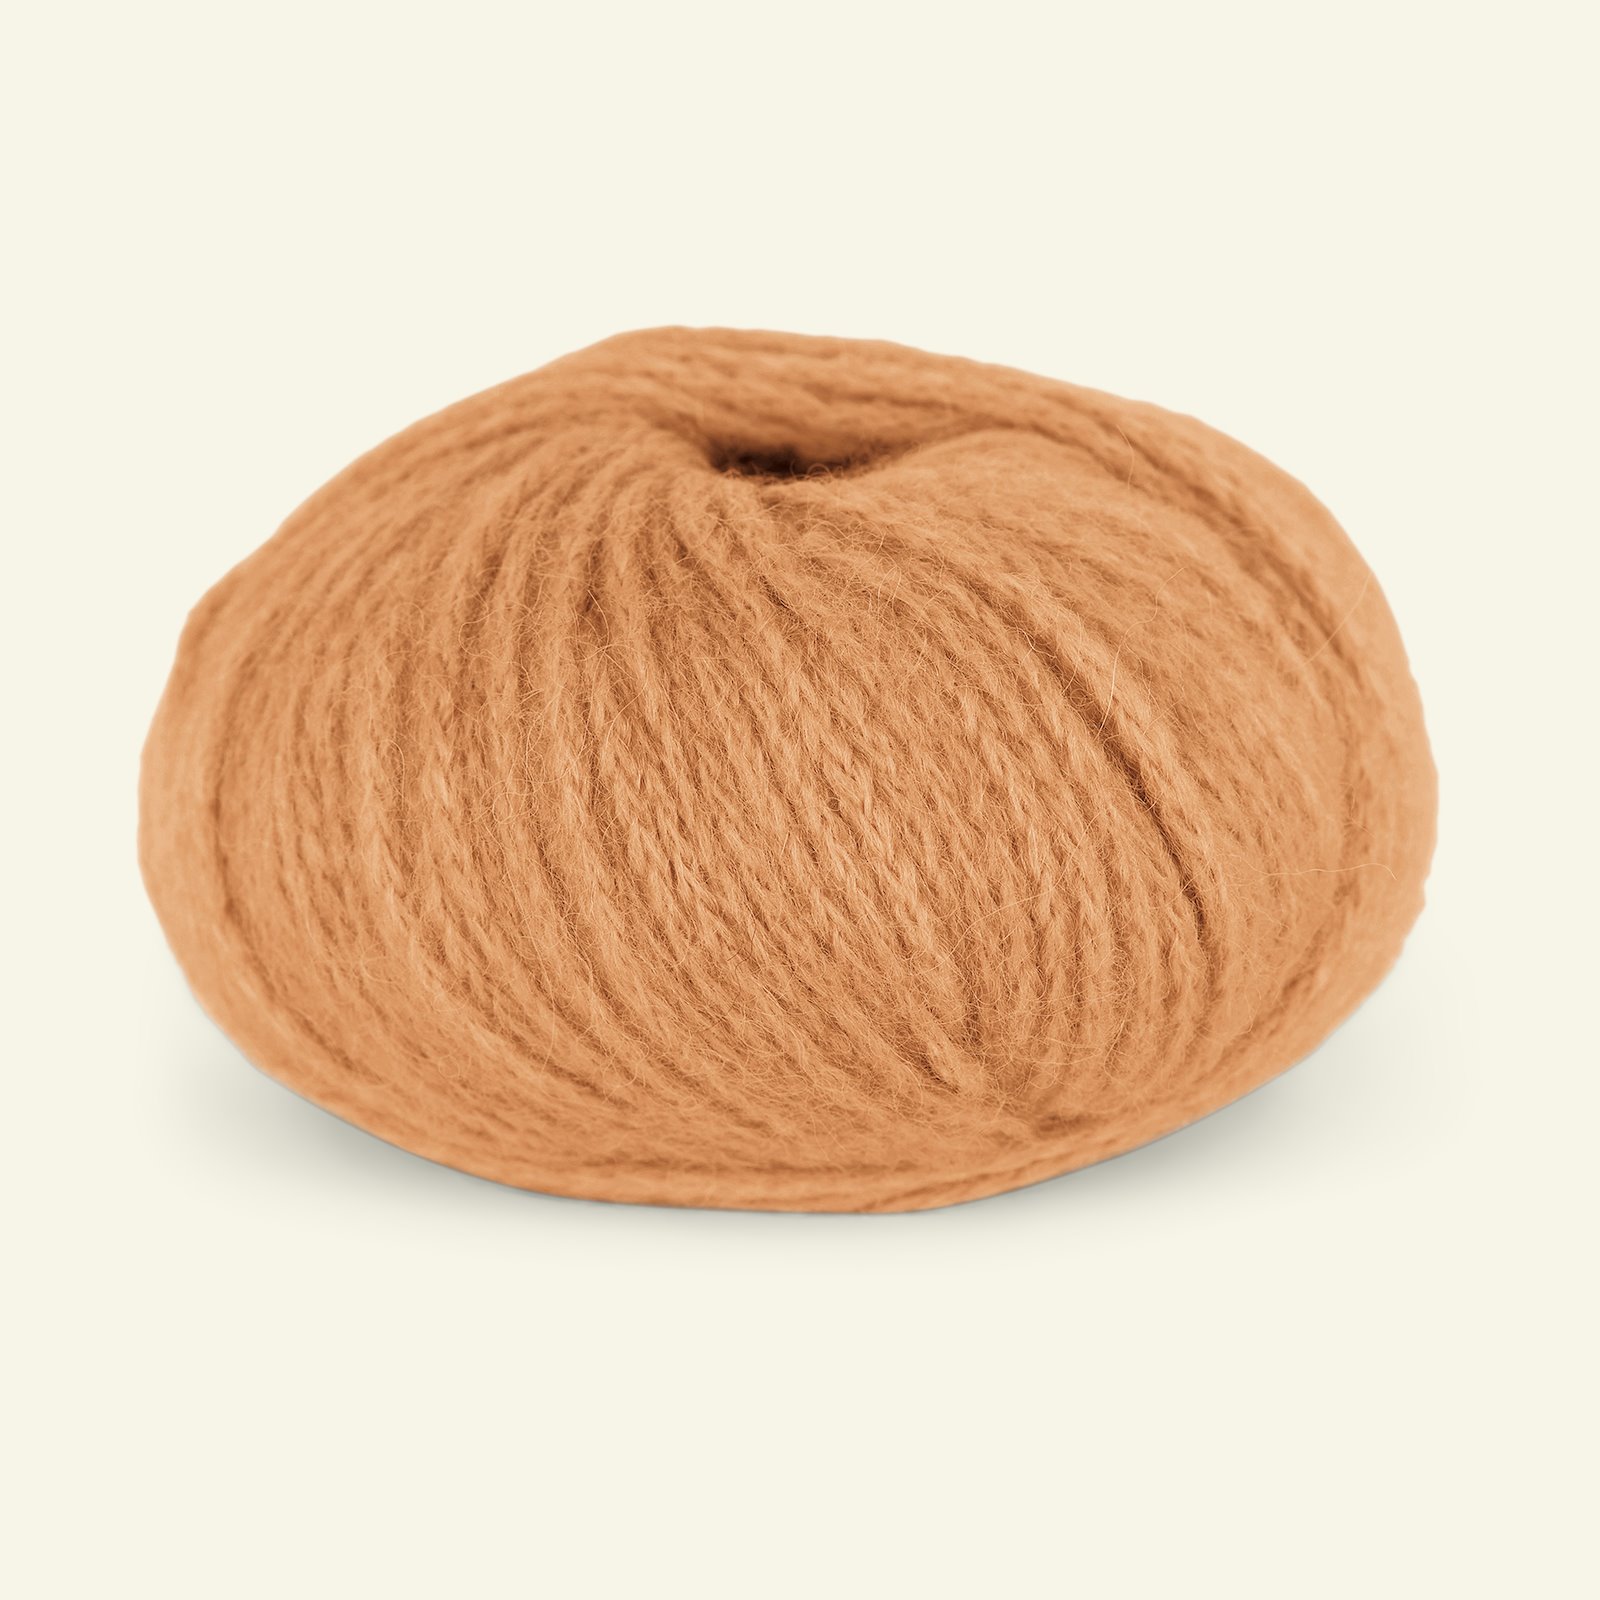 Du Store Alpakka, alpaca mixed yarn "Pus", saffron yellow (4033) 90000726_pack_b